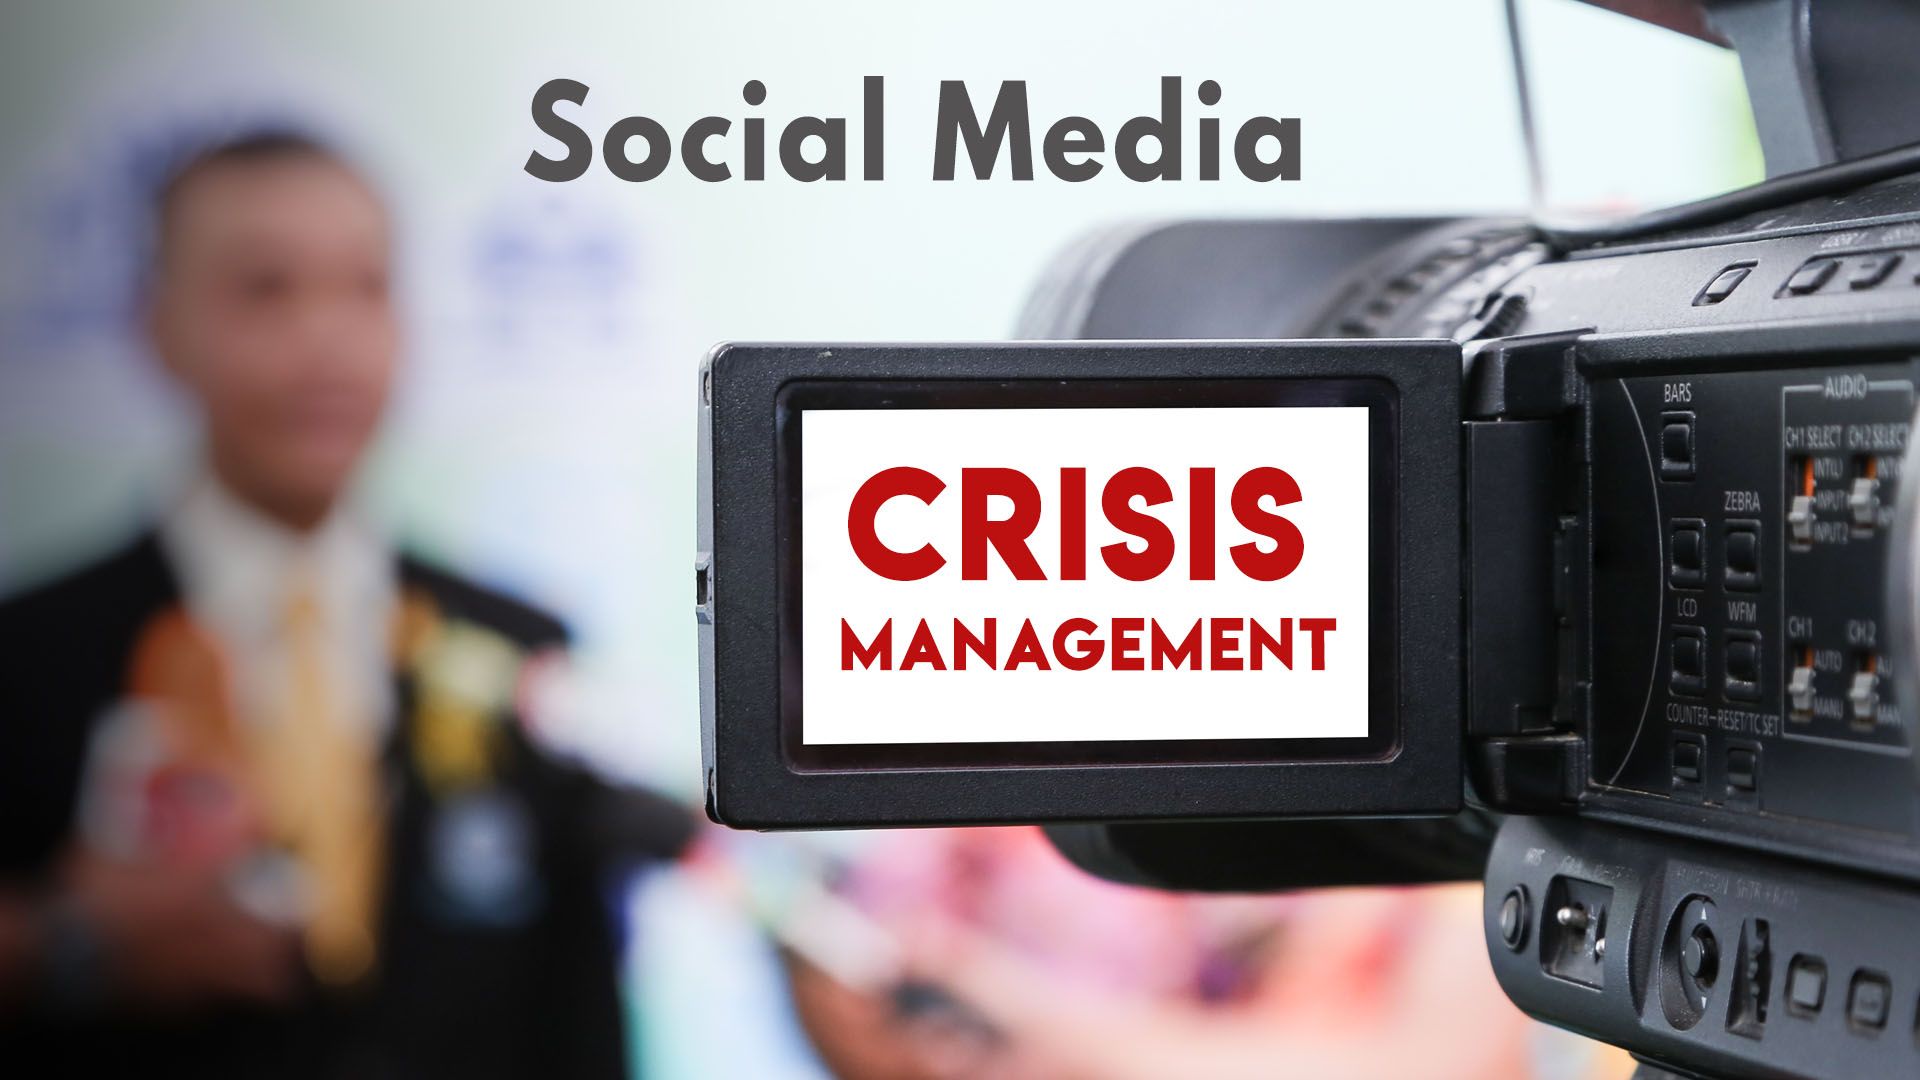 Social media crisis management examples